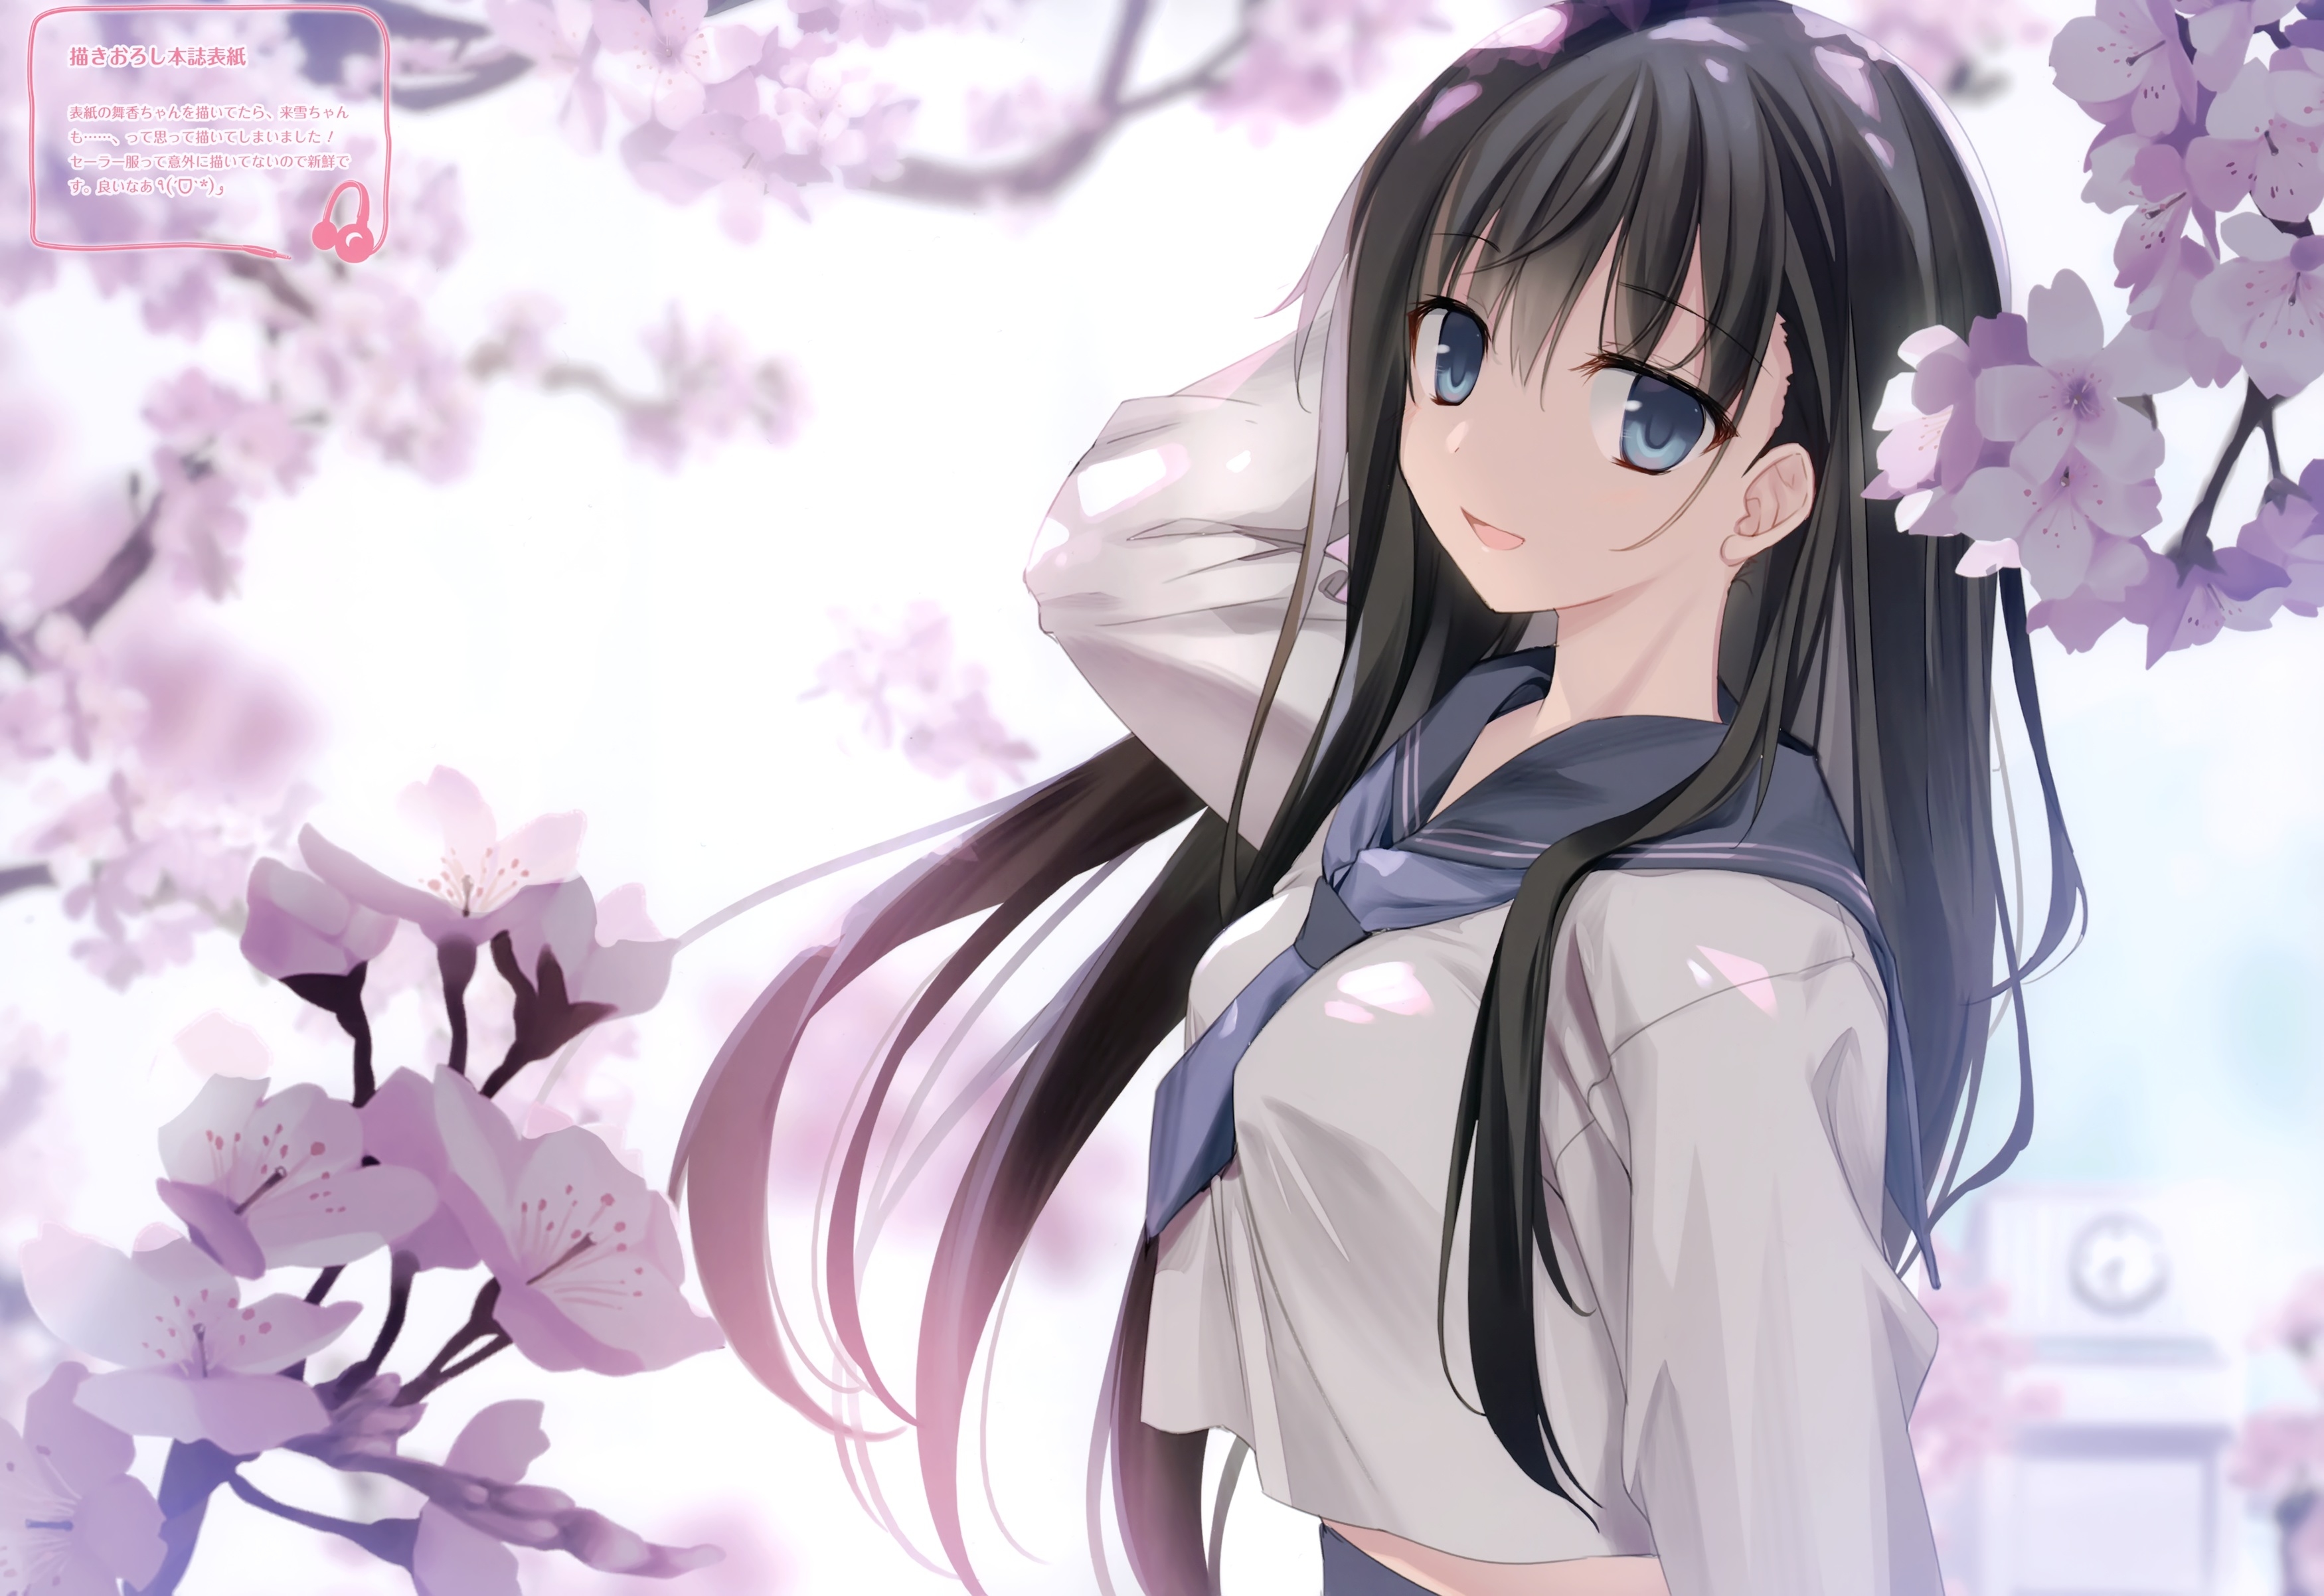 Anime girl standing under a flowering tree